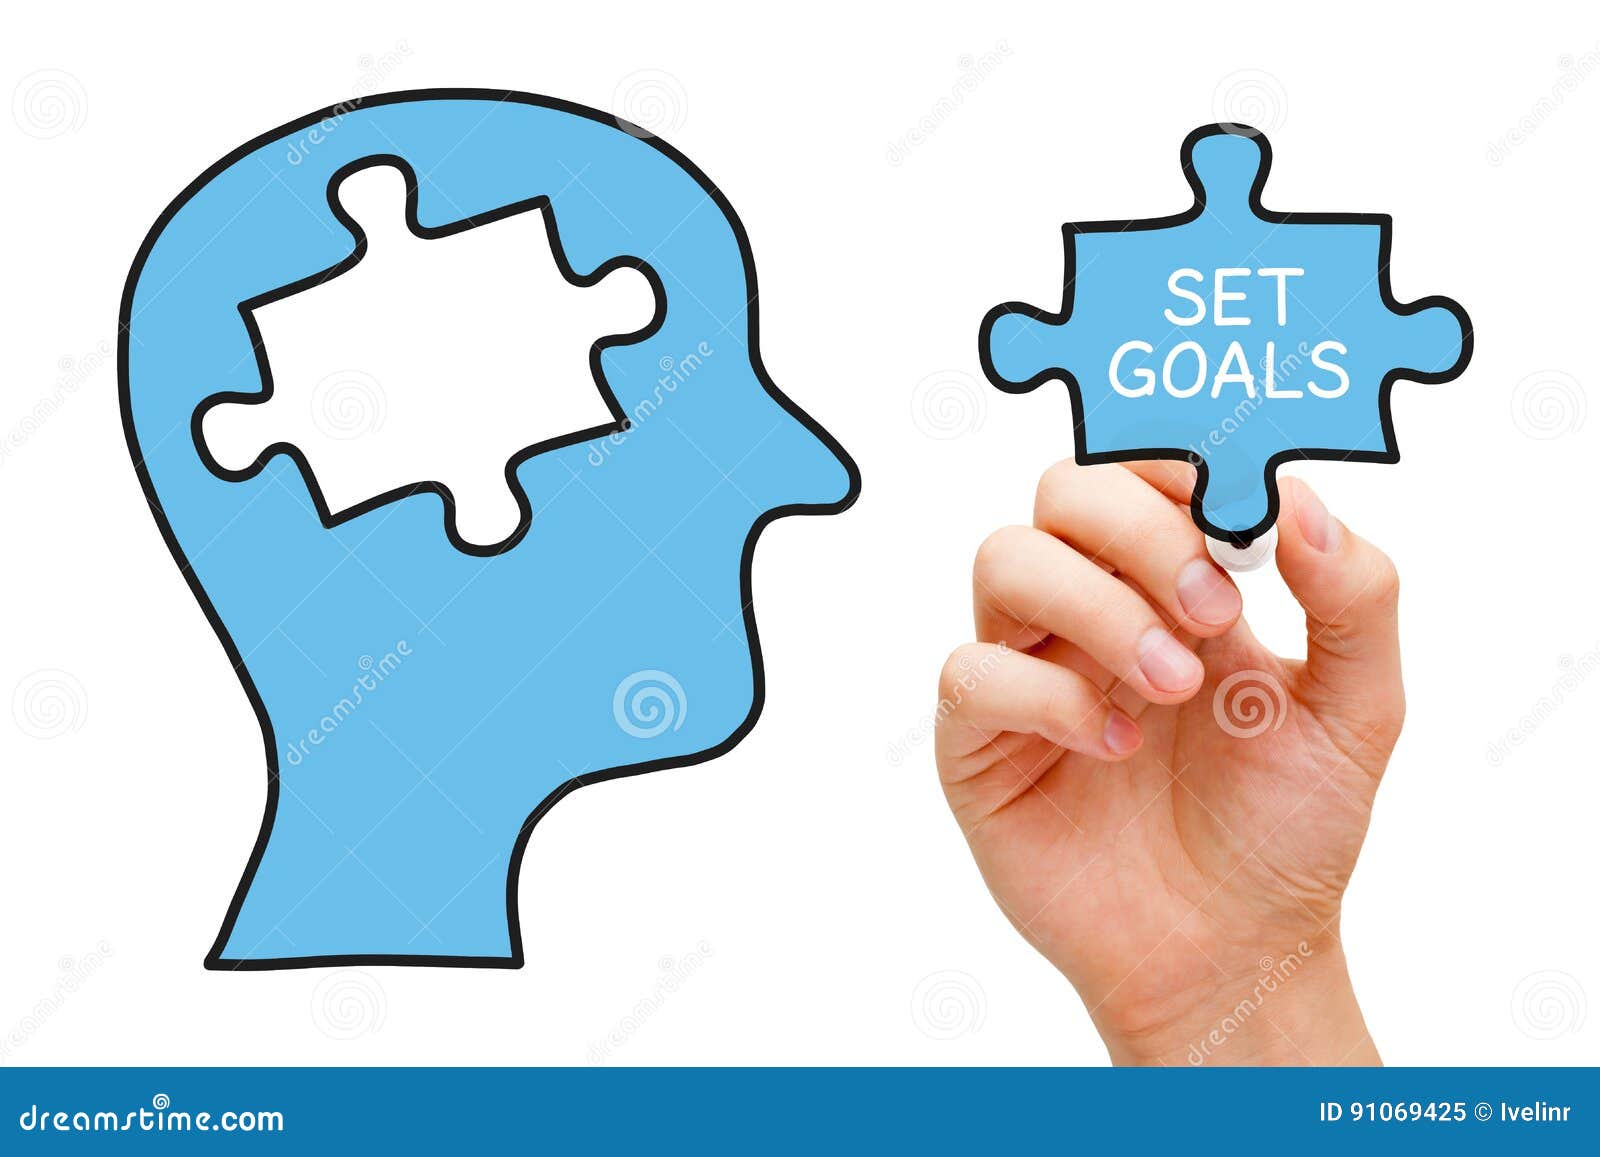 Set Goals Puzzle Head Concept Stock Image